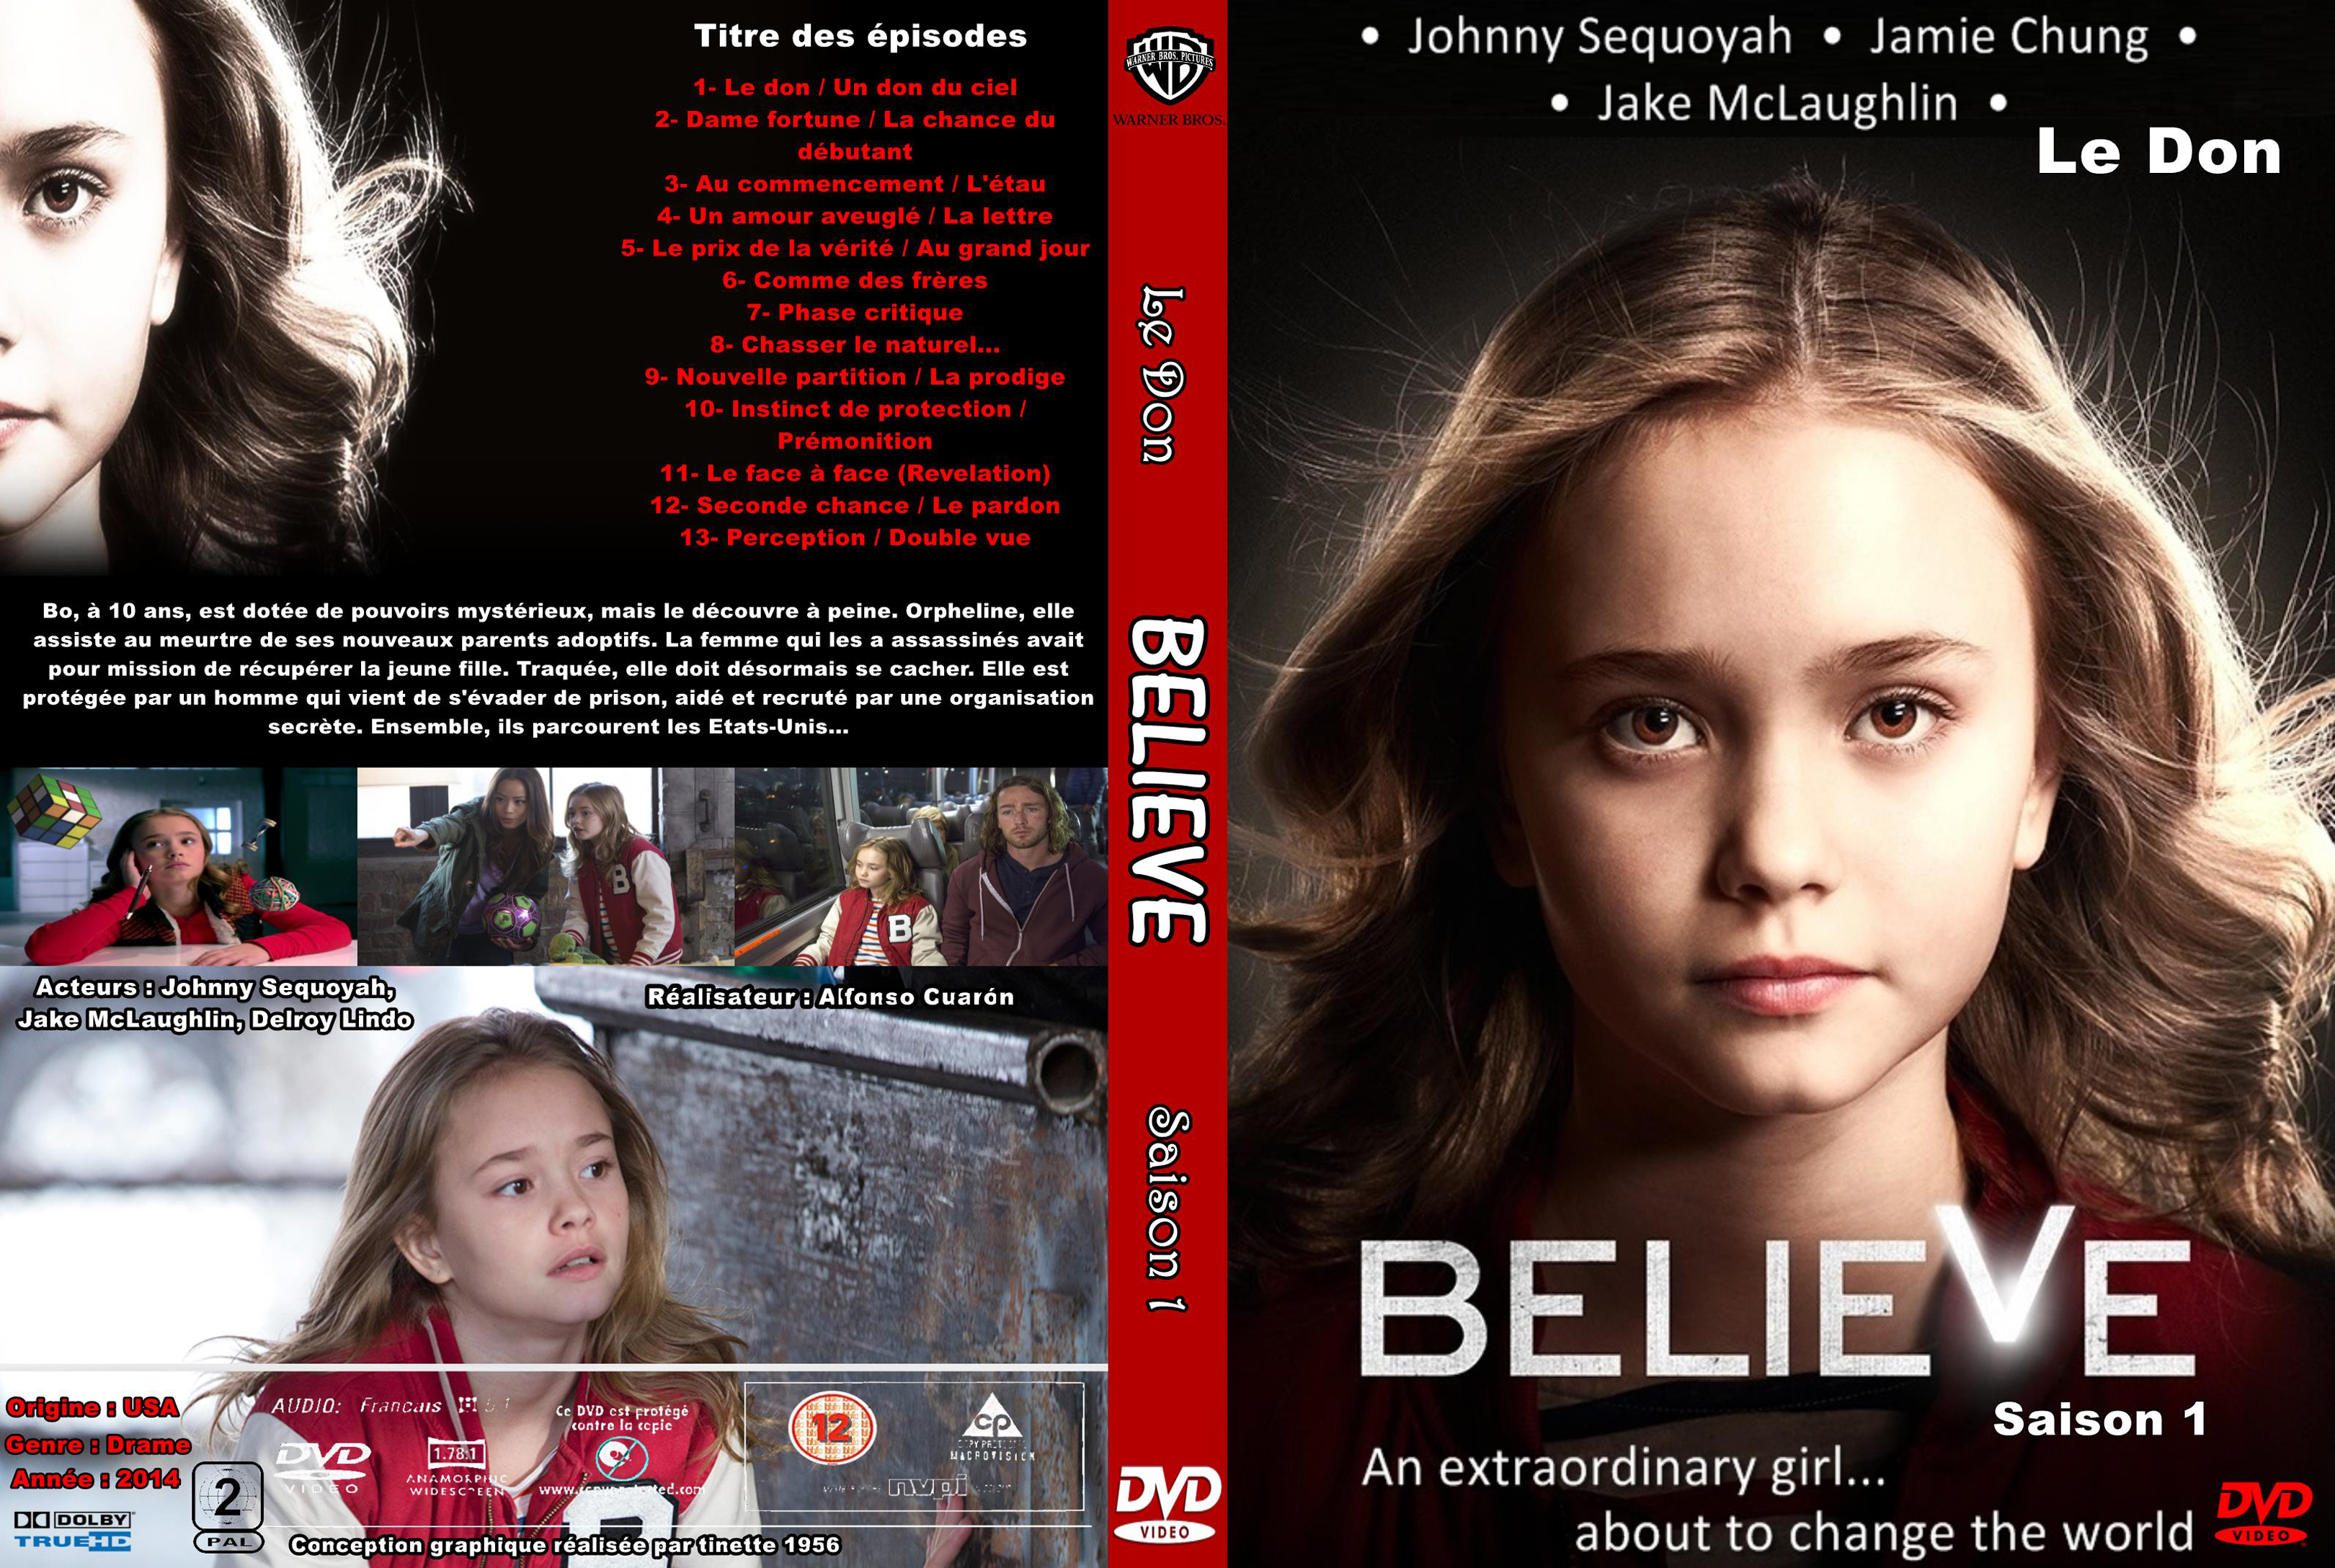 Jaquette DVD Believe saison 1 custom